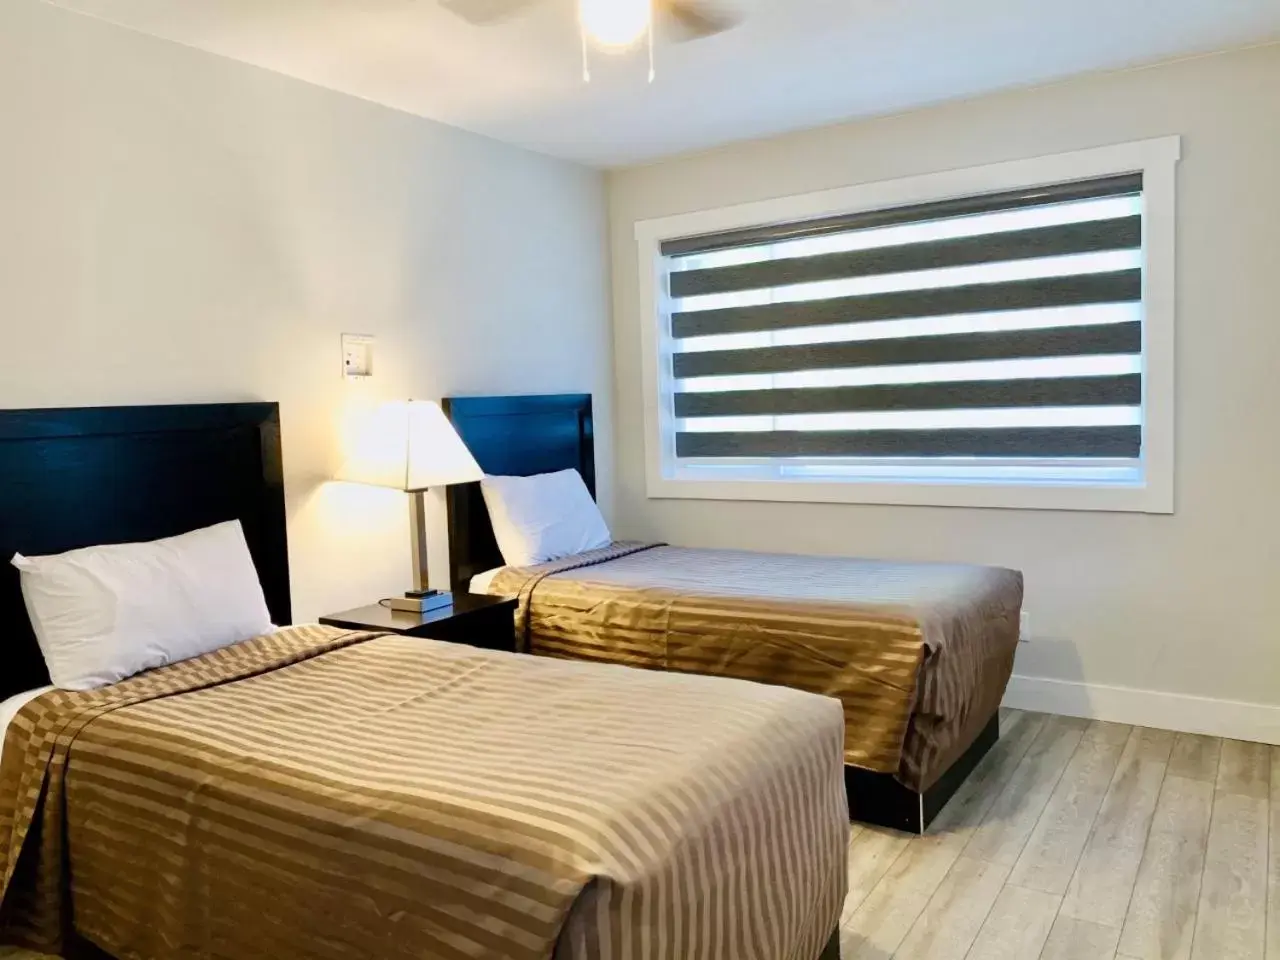 Bedroom, Bed in Traveler's Motel Penticton